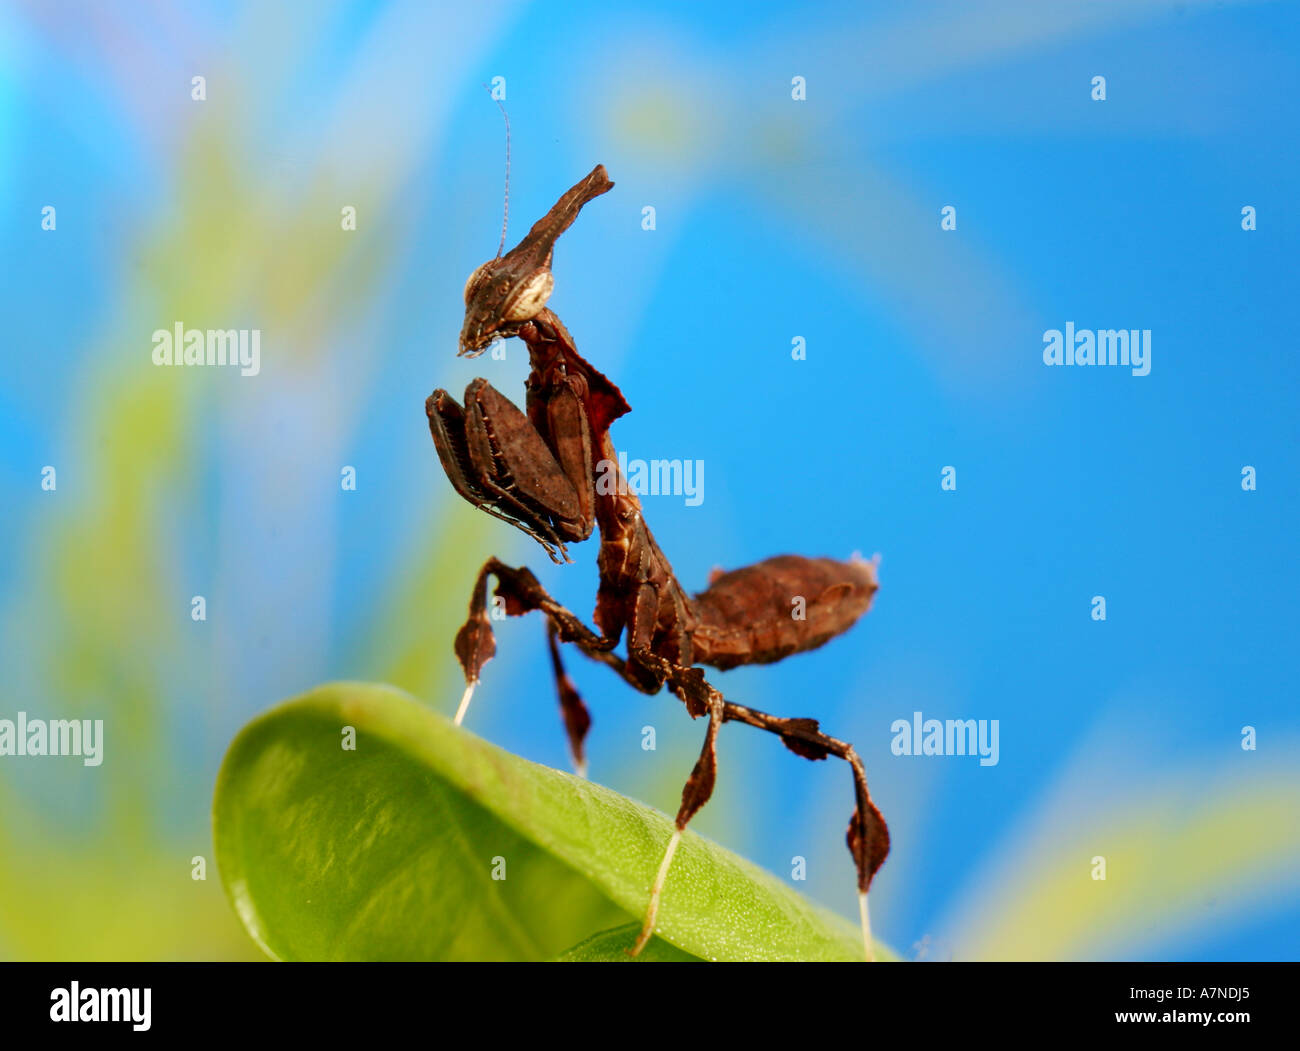 outdoors summer day nature insect mantis phyllocrania paradoxa plant plants close up horizontal Stock Photo